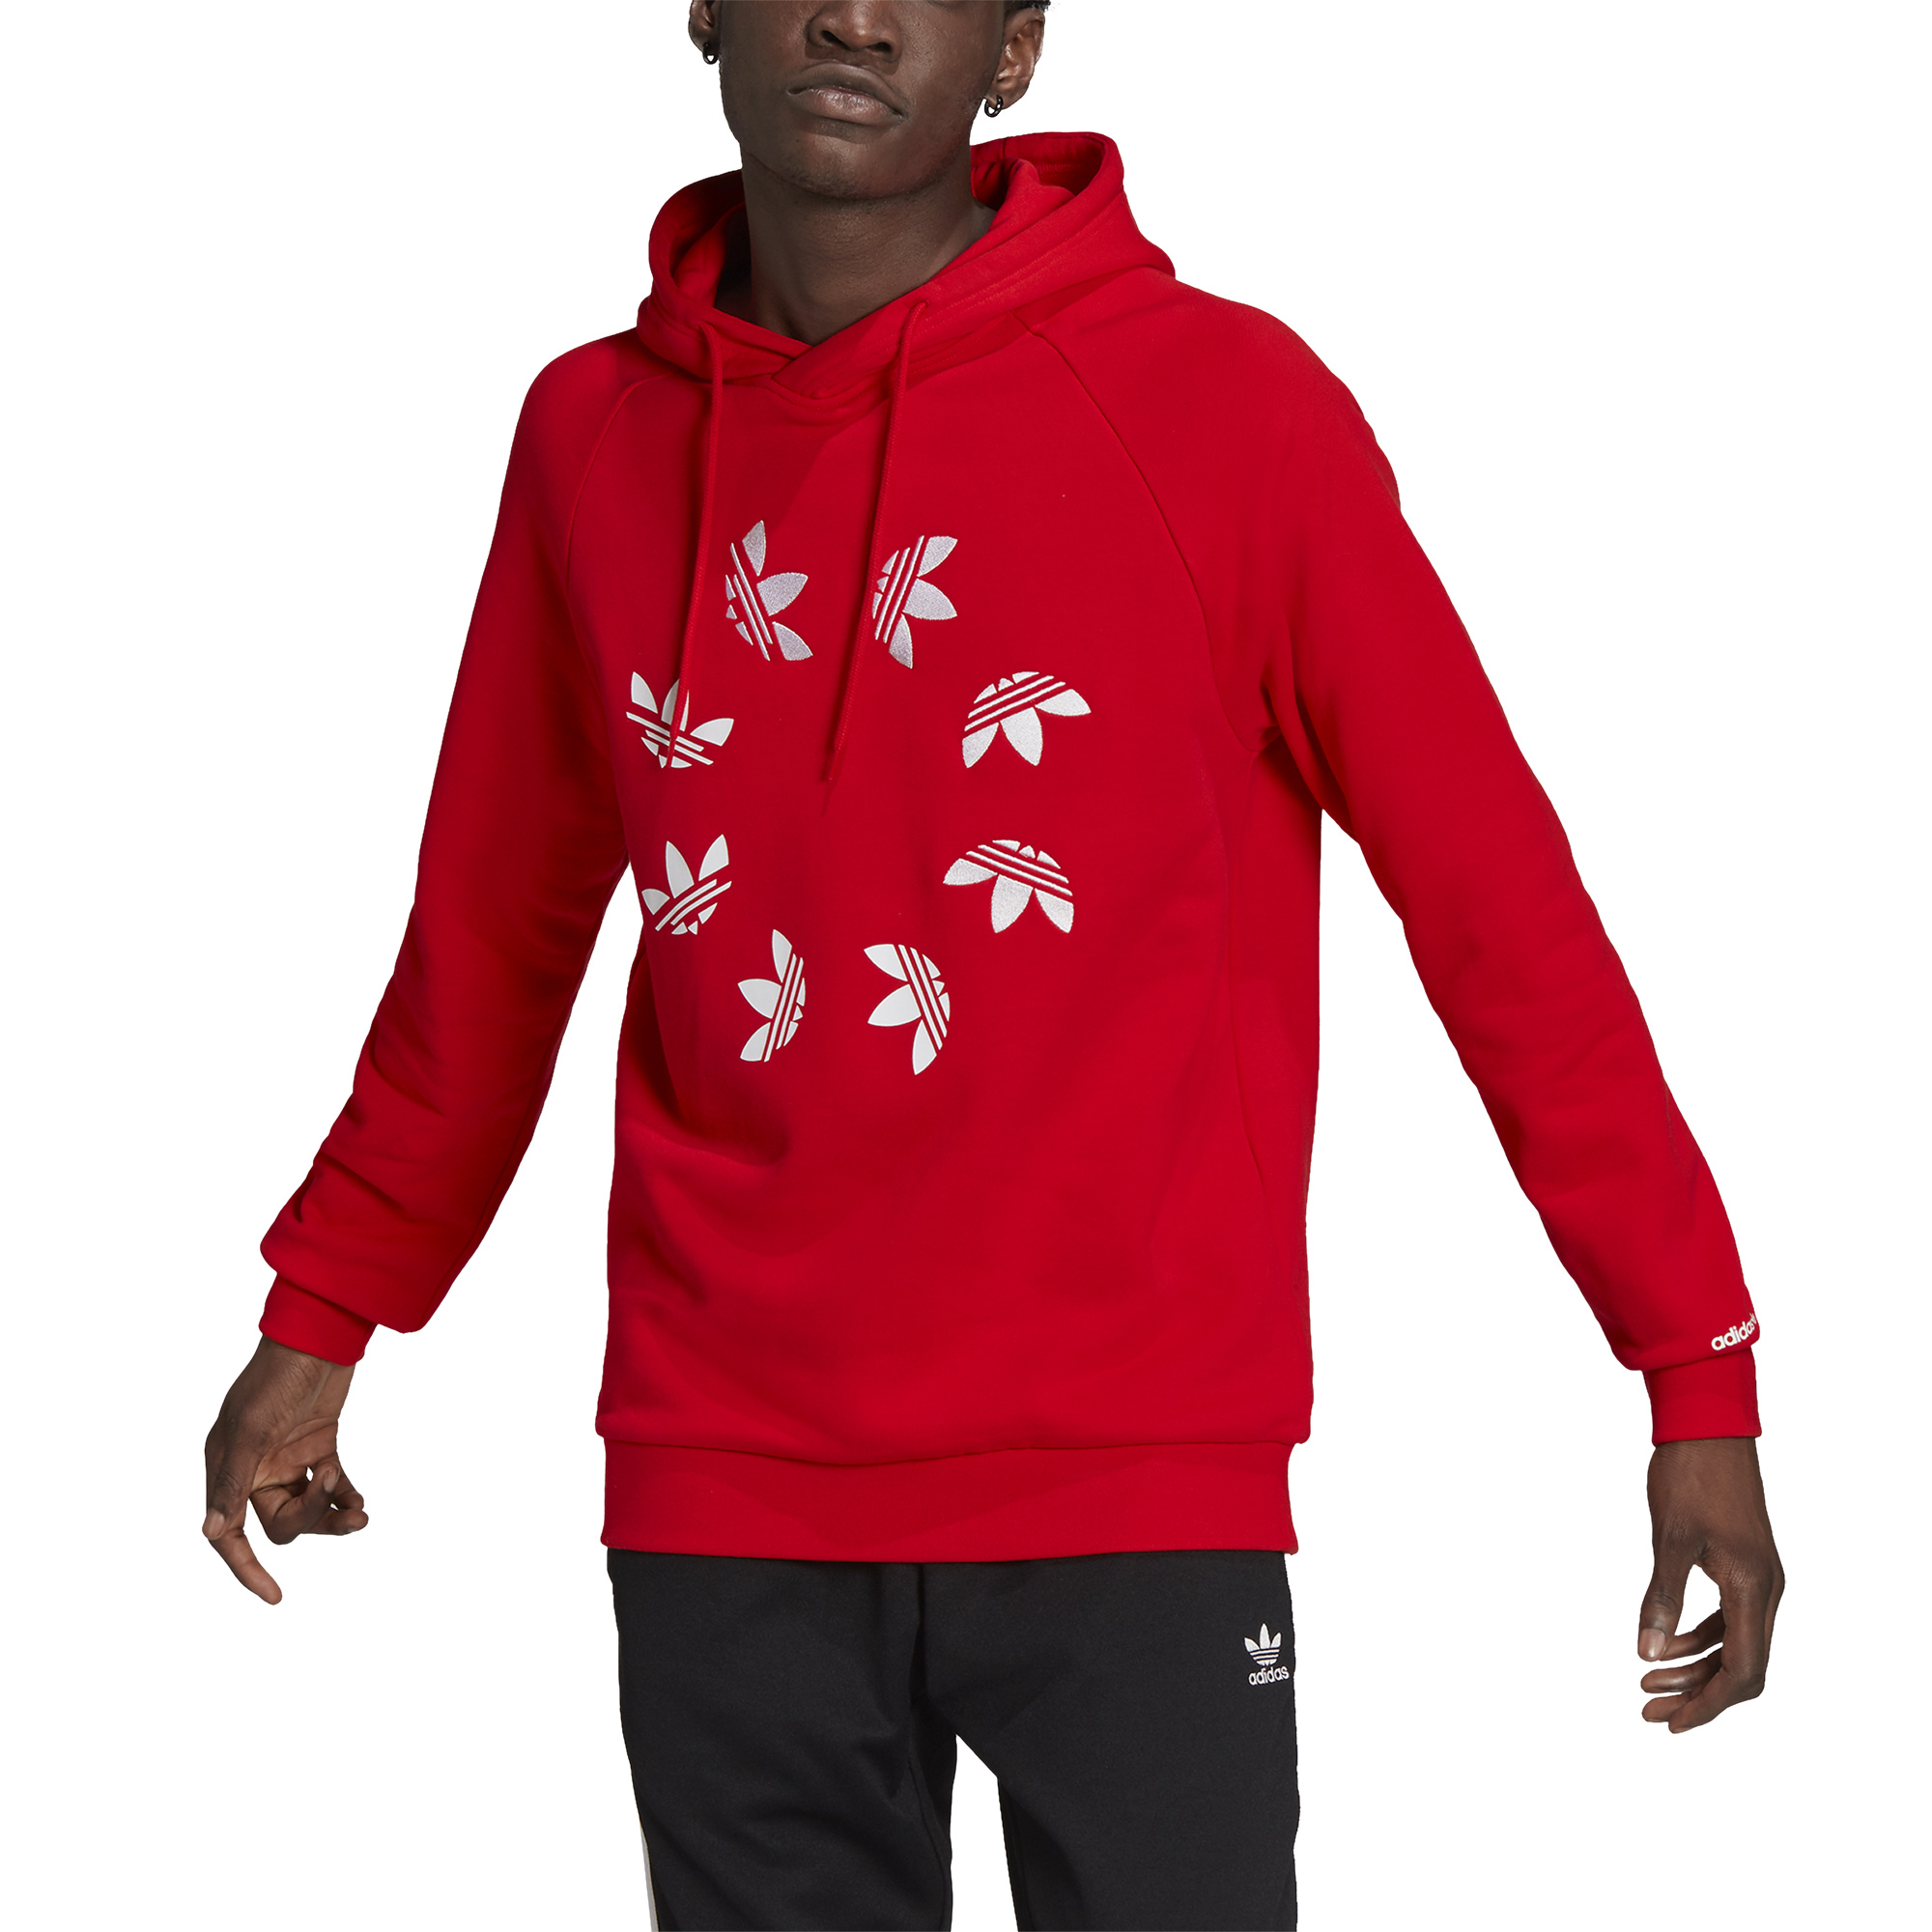 adidas-originals-bold-trefoil-hoodie-red-white